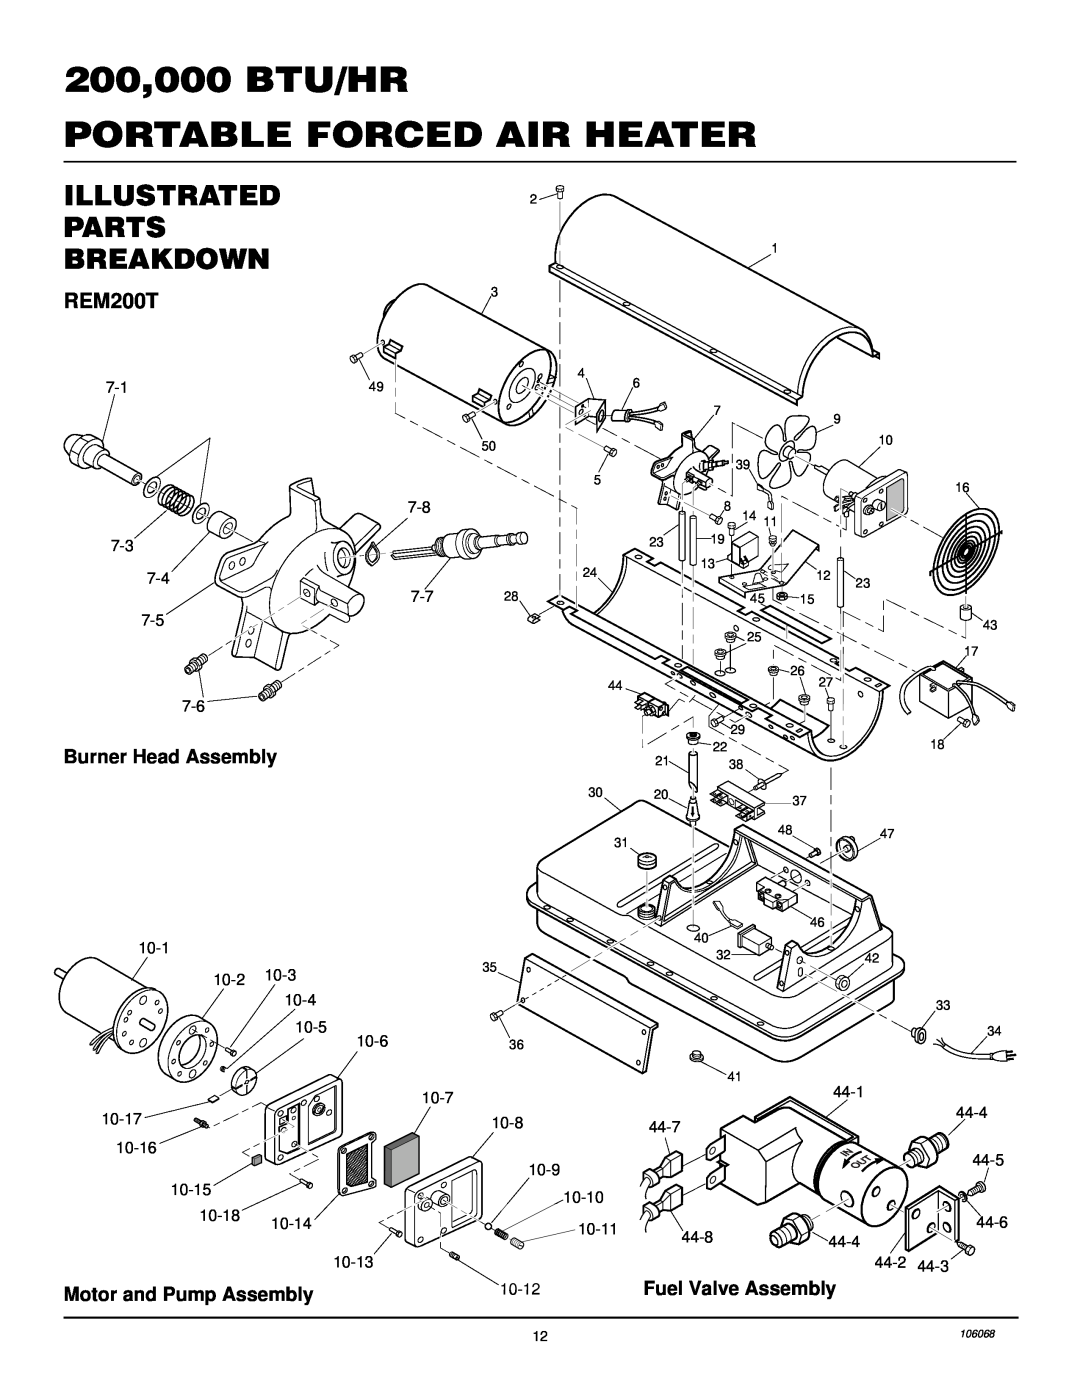 Desa REM200T owner manual Illustrated Parts Breakdown, Burner Head Assembly, Motor and Pump Assembly, Fuel Valve Assembly 